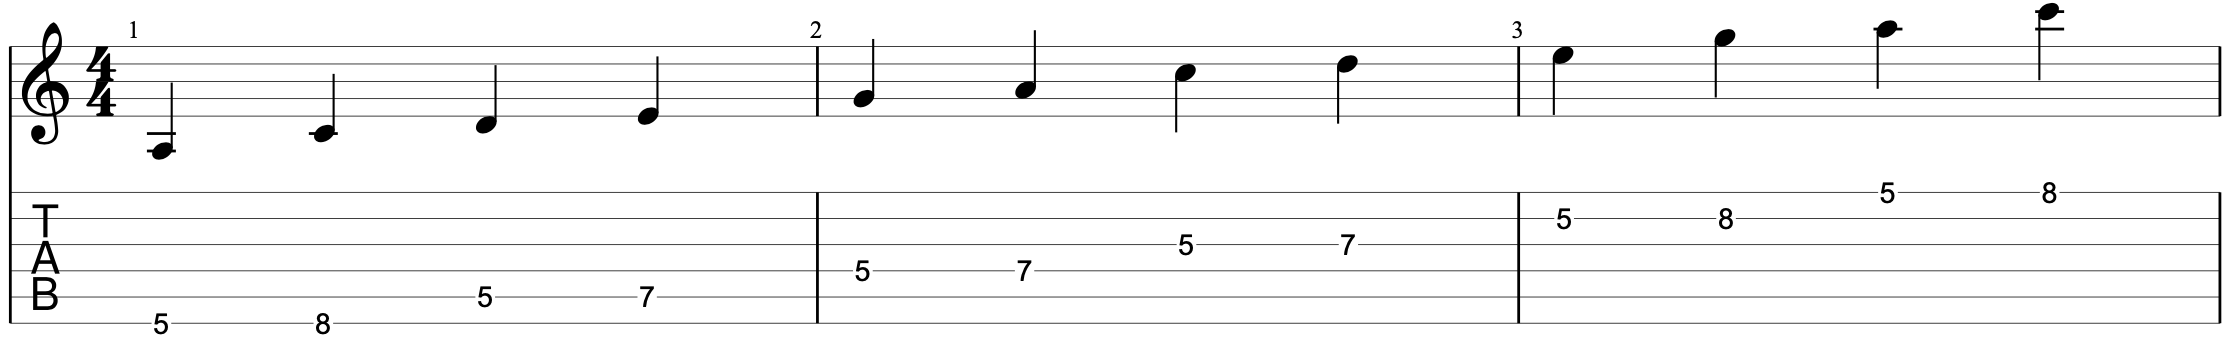 A Minor Pentatonic Scale Guitar Tab